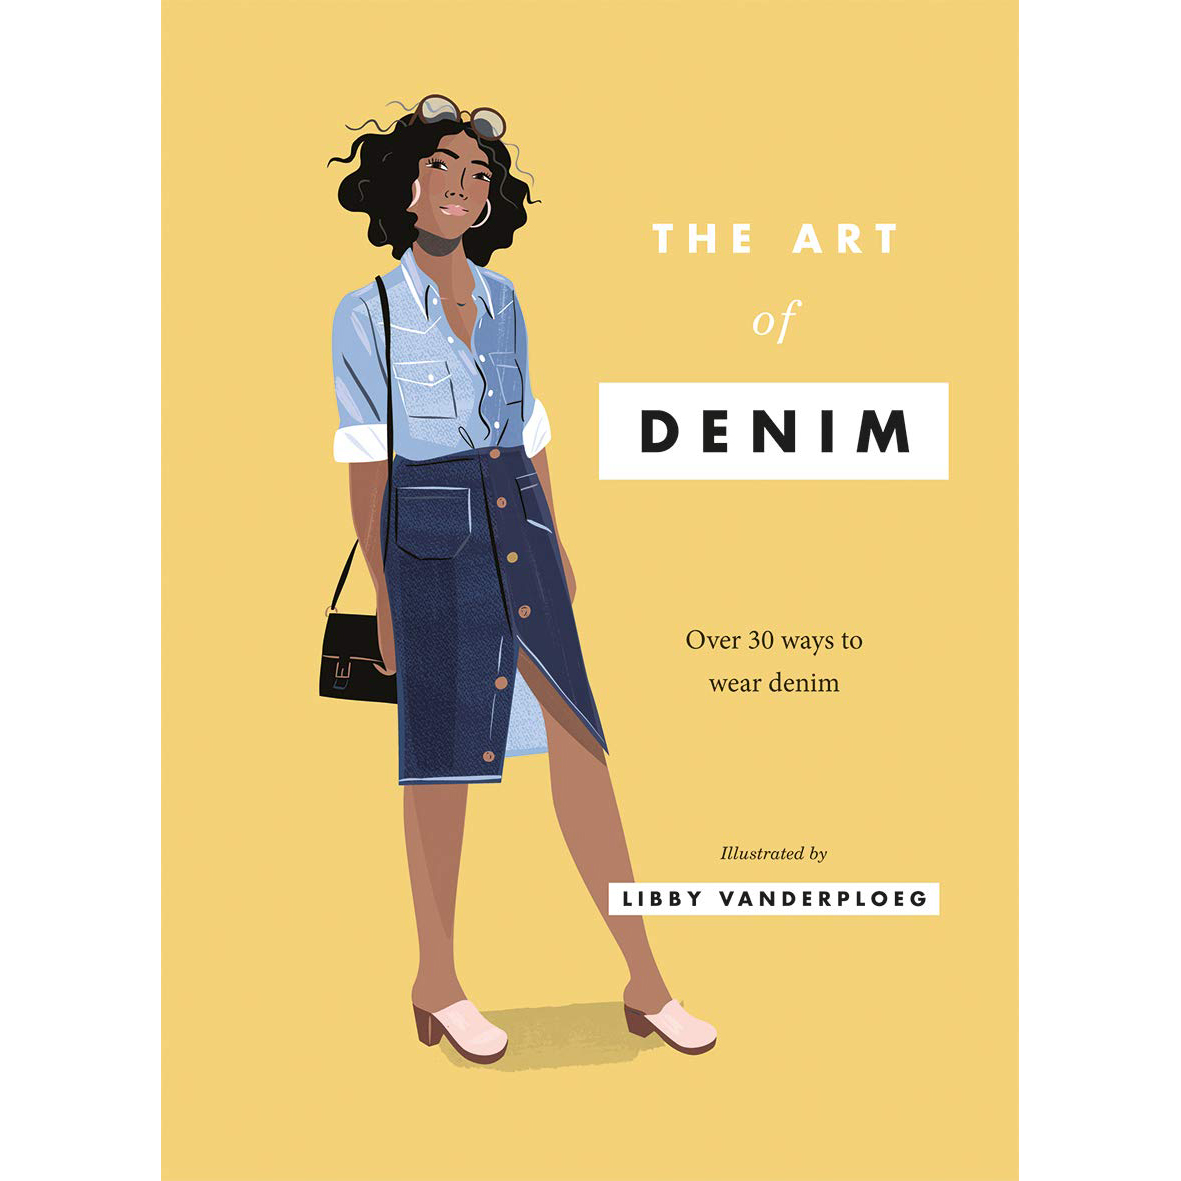 The Art of Denim:Over 30 ways to wear denim